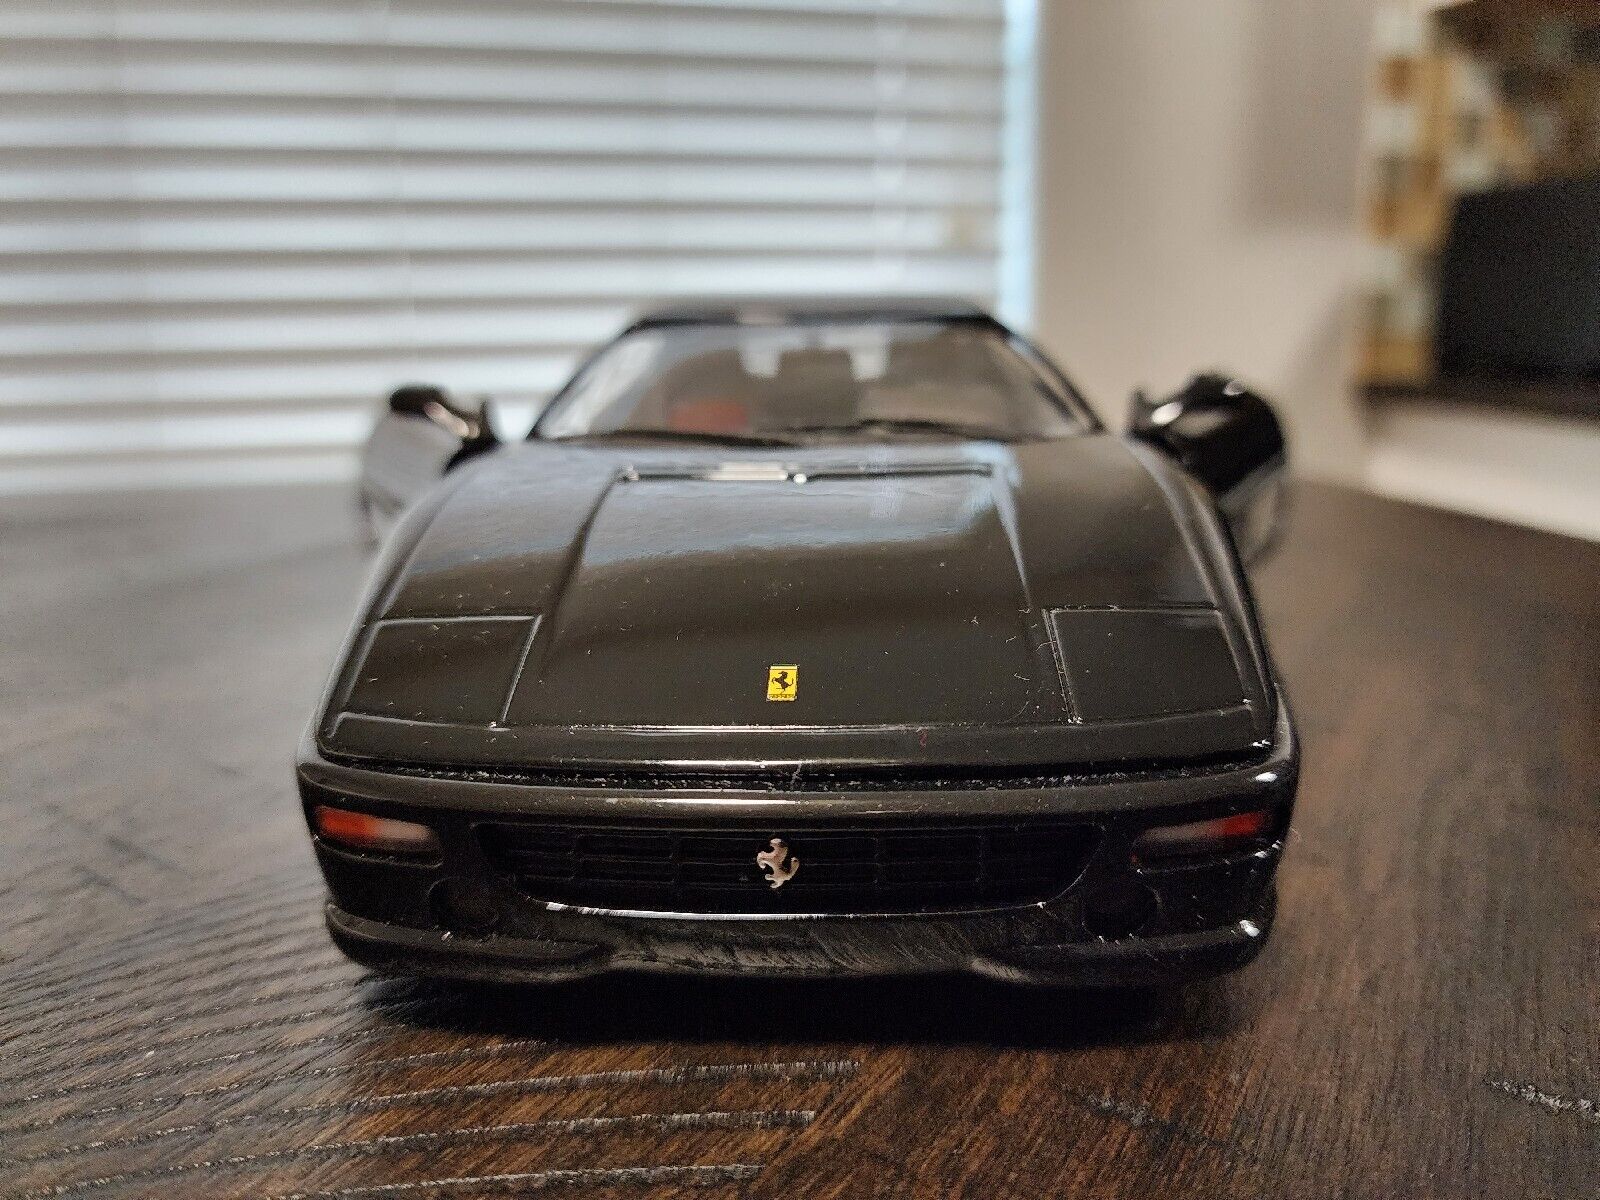 Hot Wheels 1:18 Ferrari 355 GTS Model Kit - very rare and complete!